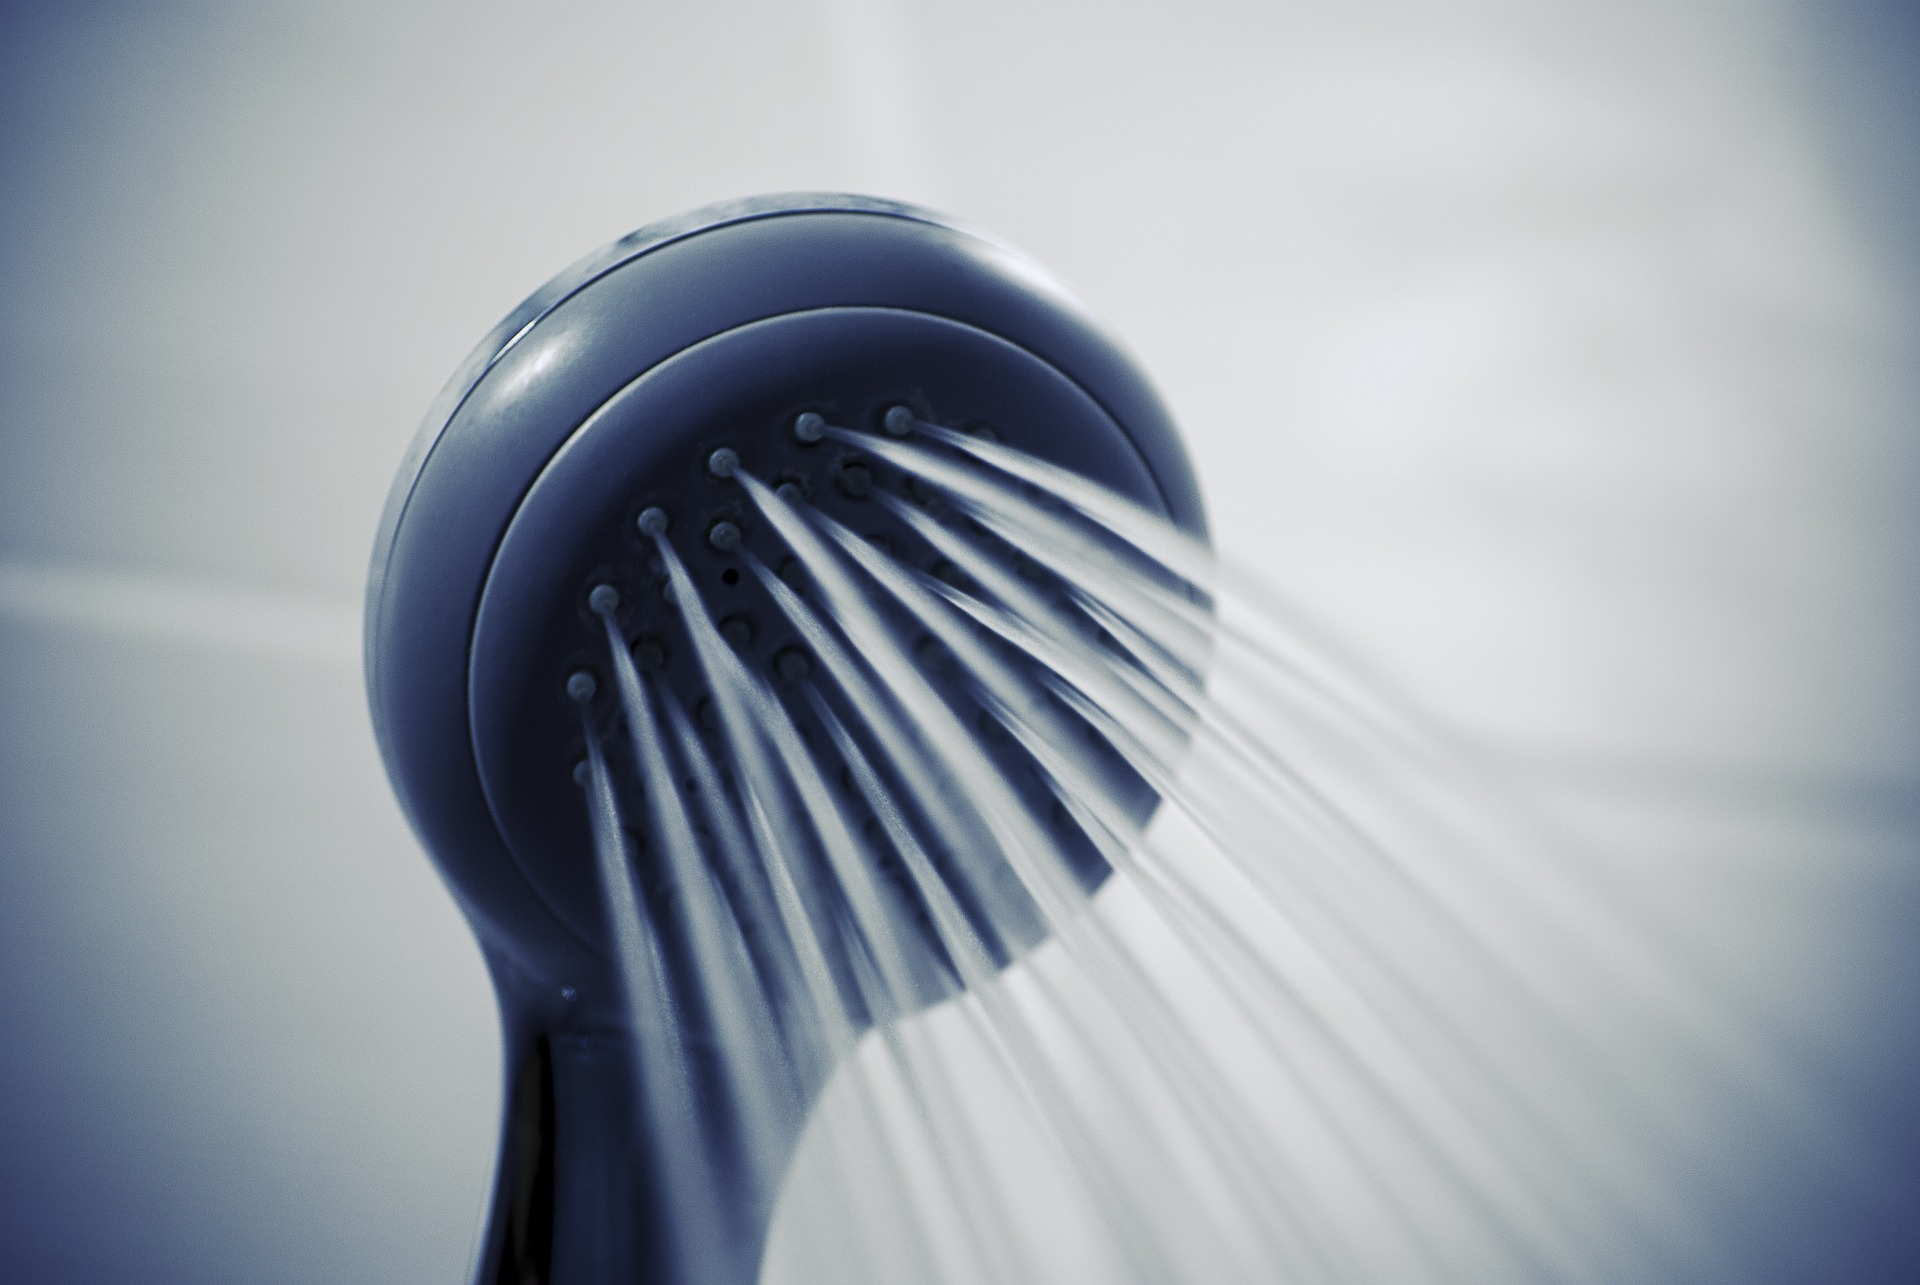 Shower head streaming water, tookapic via Pixabay